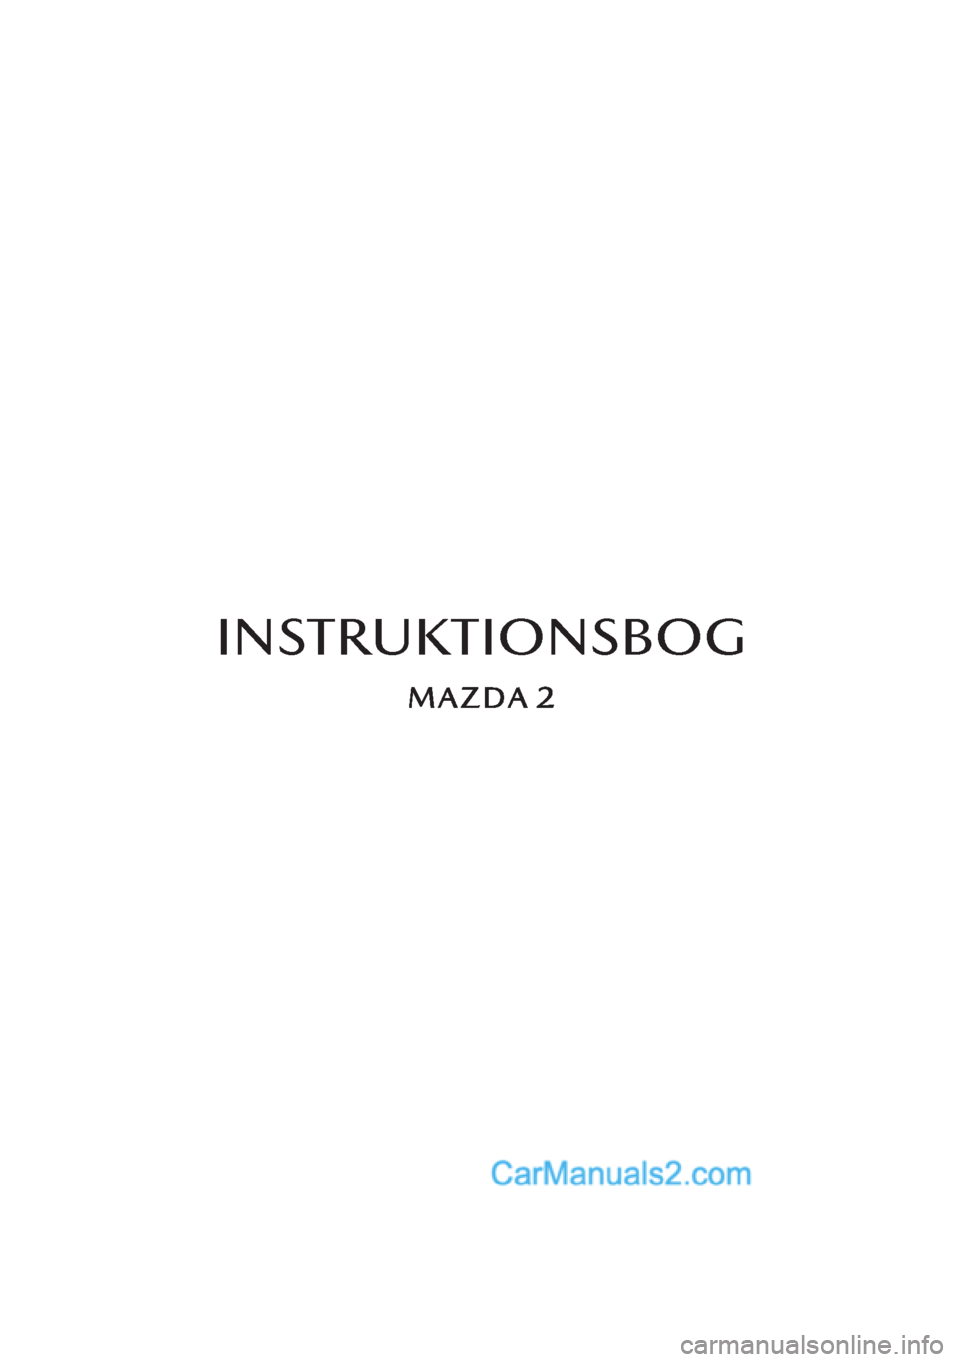 MAZDA MODEL 2 2019  Instruktionsbog (in Danish) INSTRUKTIONSBOG  